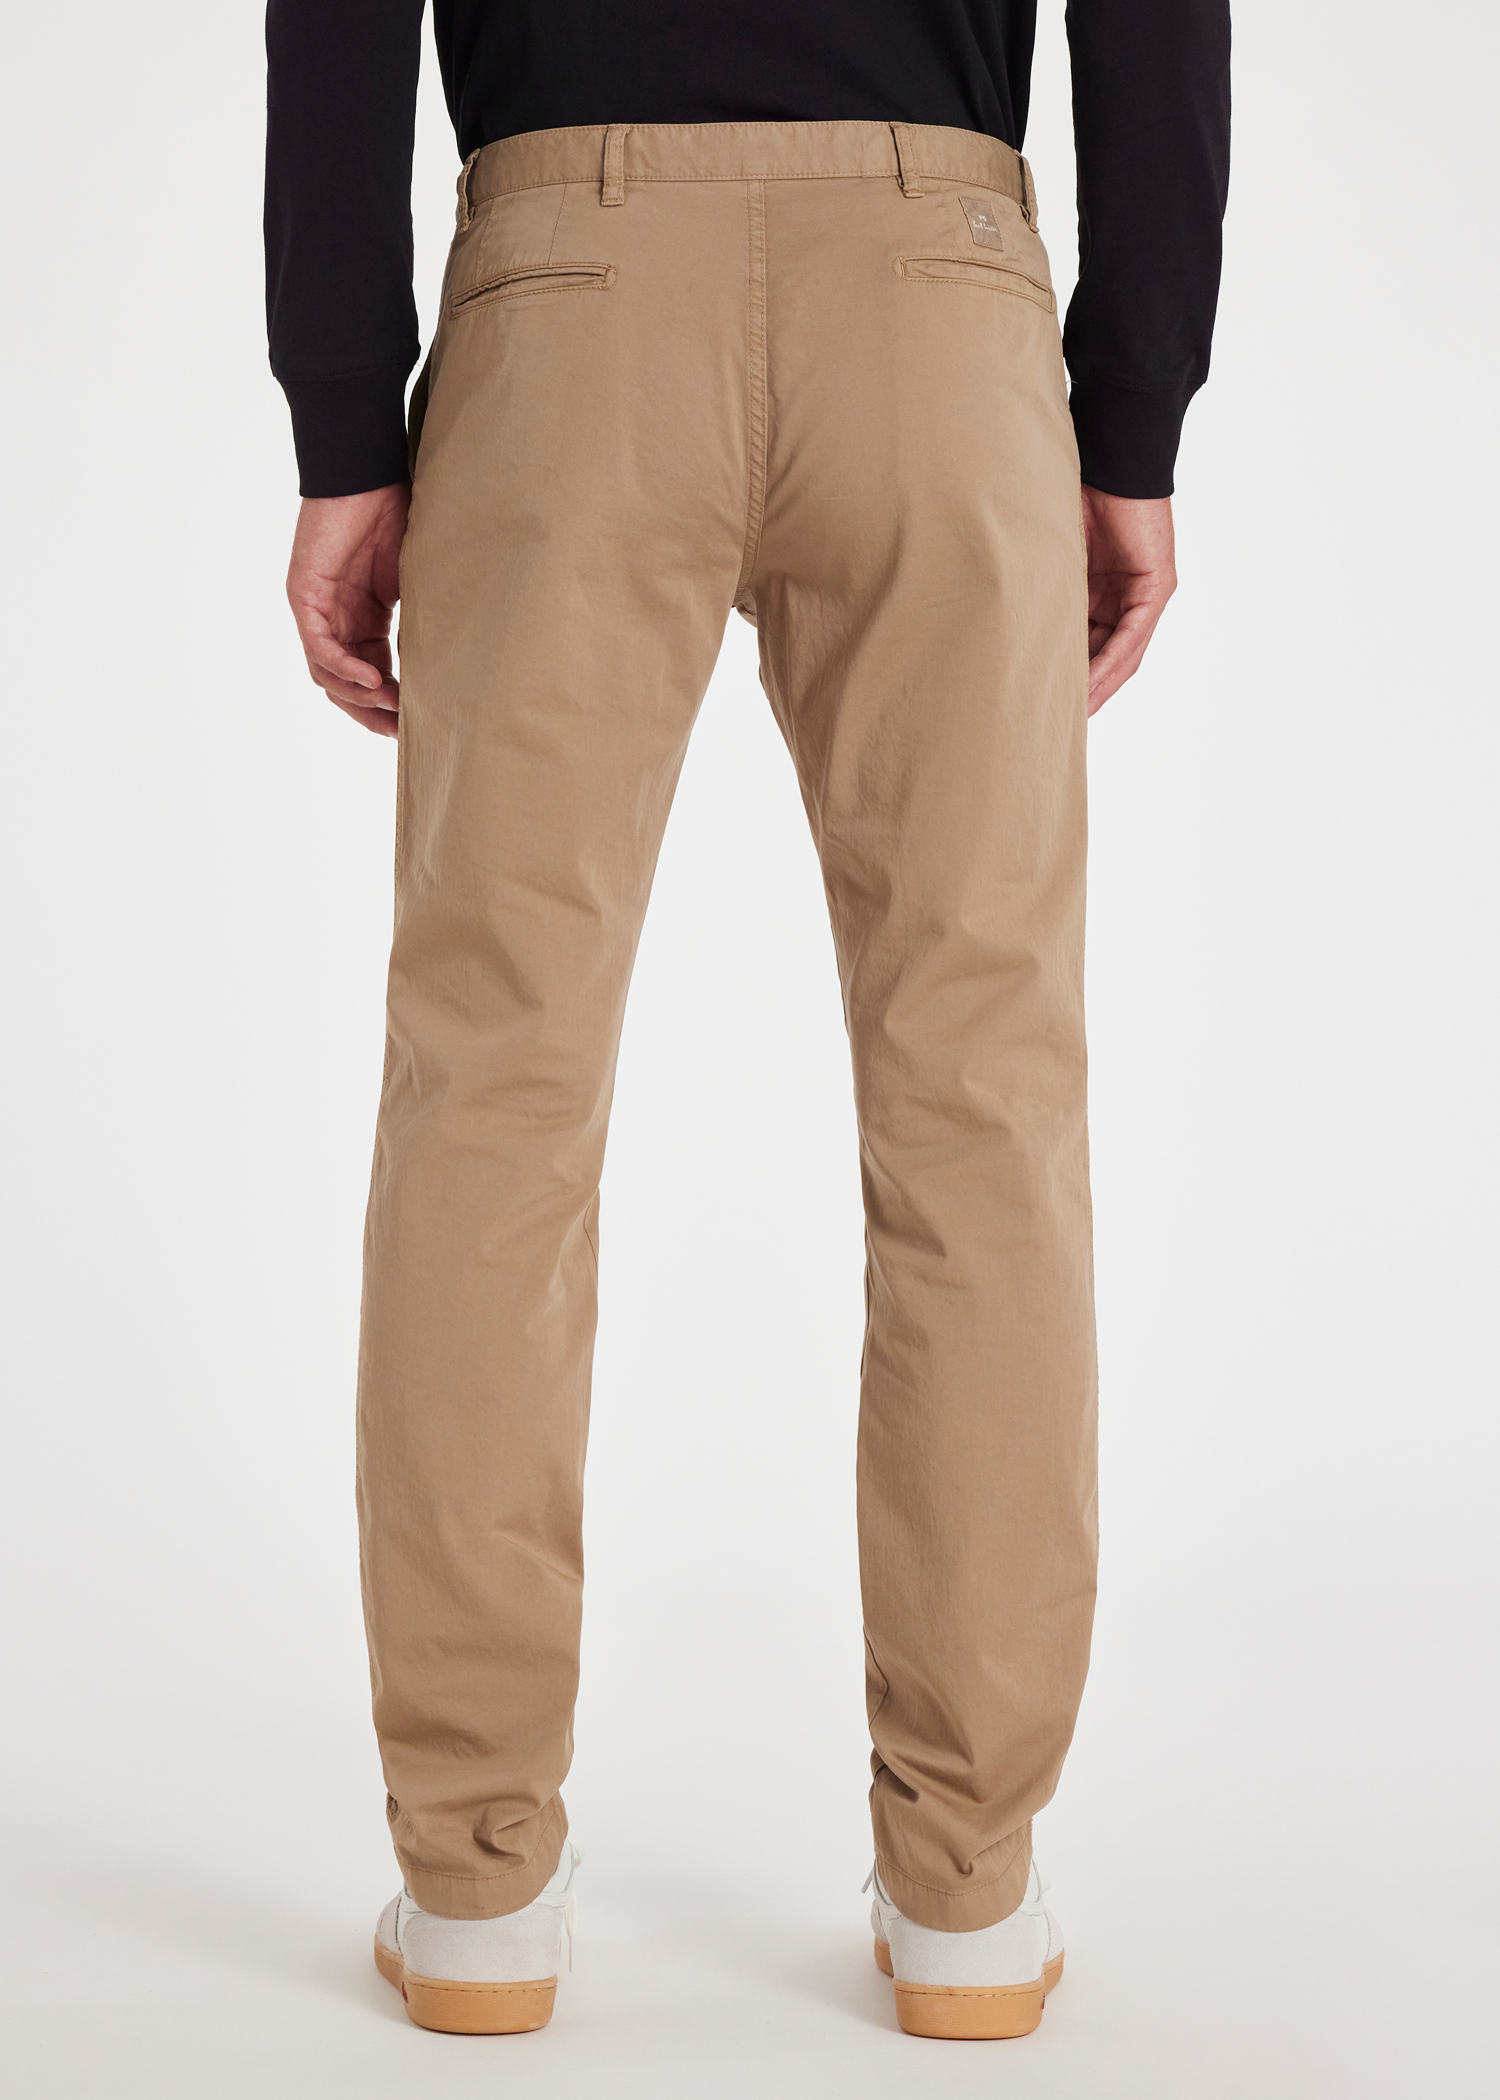 Designer Pants For Men